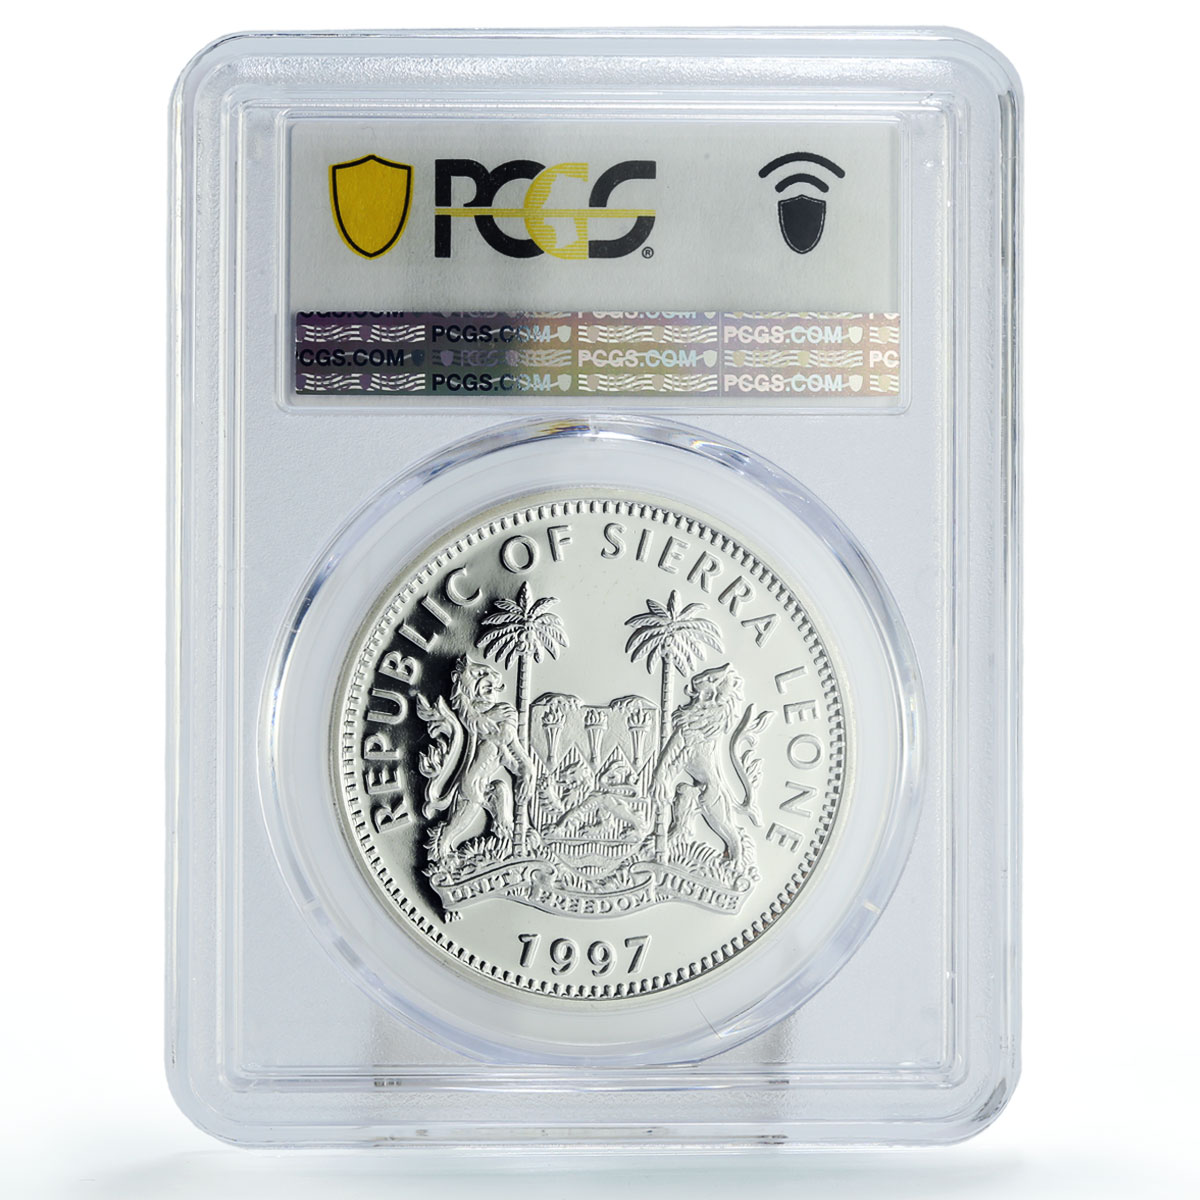 Sierra Leone 10 dollars Royal Symbols Crowned Lion PR68 PCGS silver coin 1997